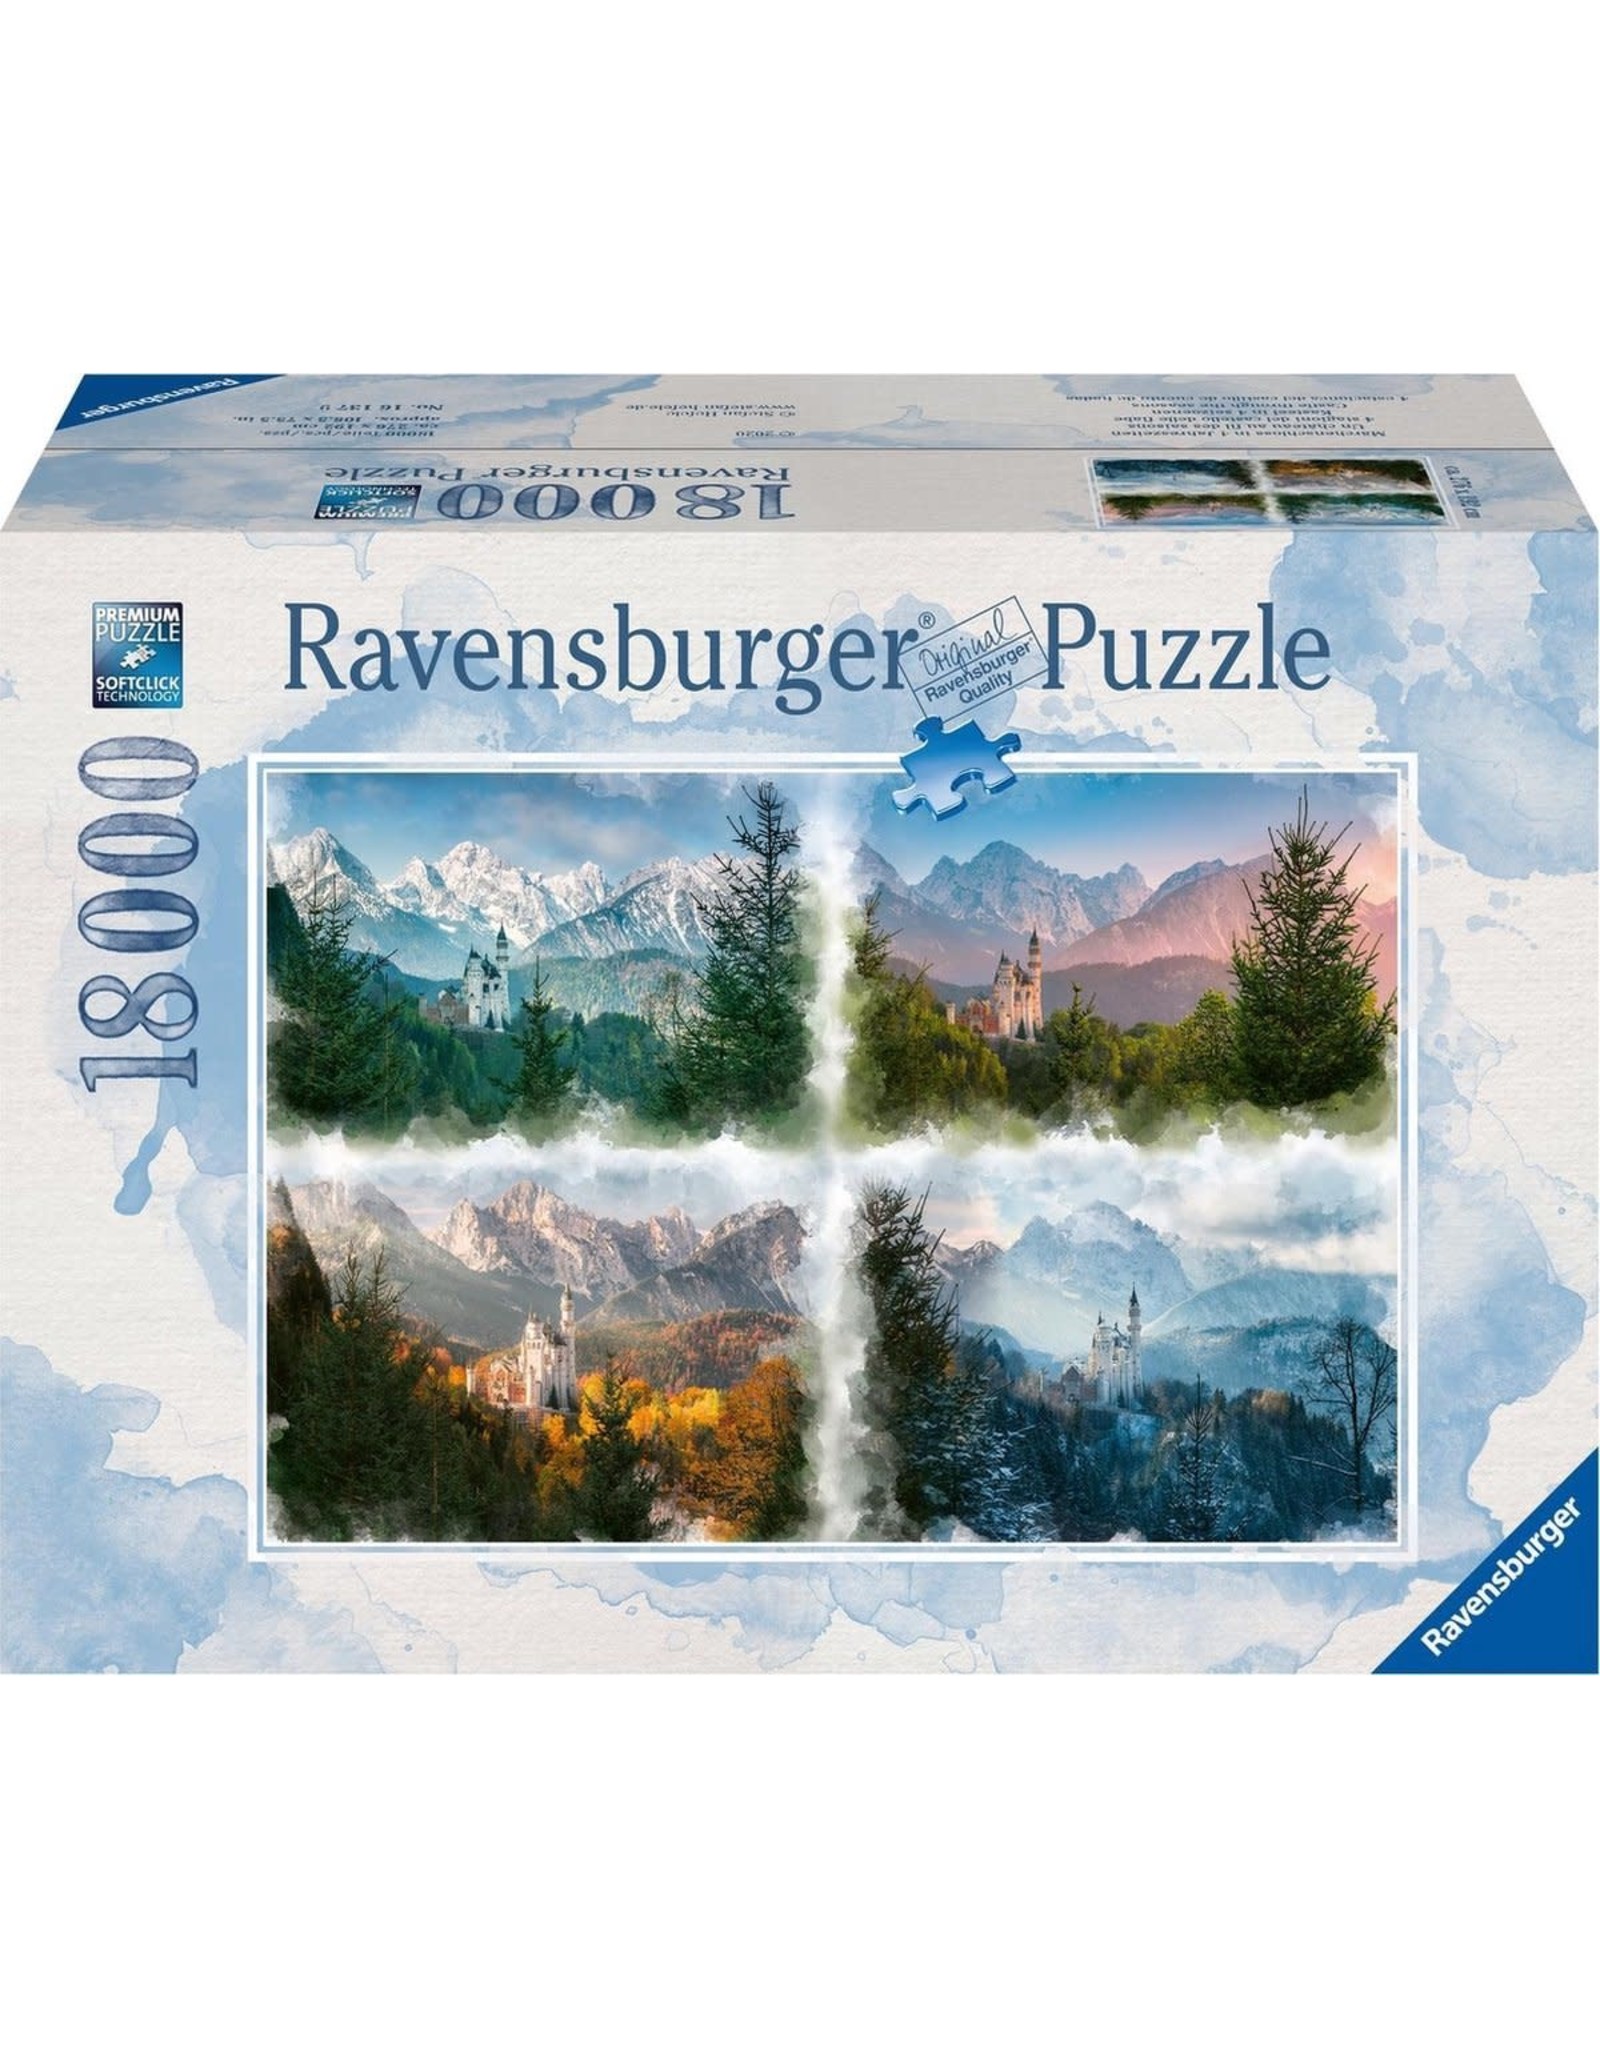 Ravensburger Ravensburger Puzzel 161379 Slot Neuschwanstein  in 4 Seizoenen  18000 stukjes